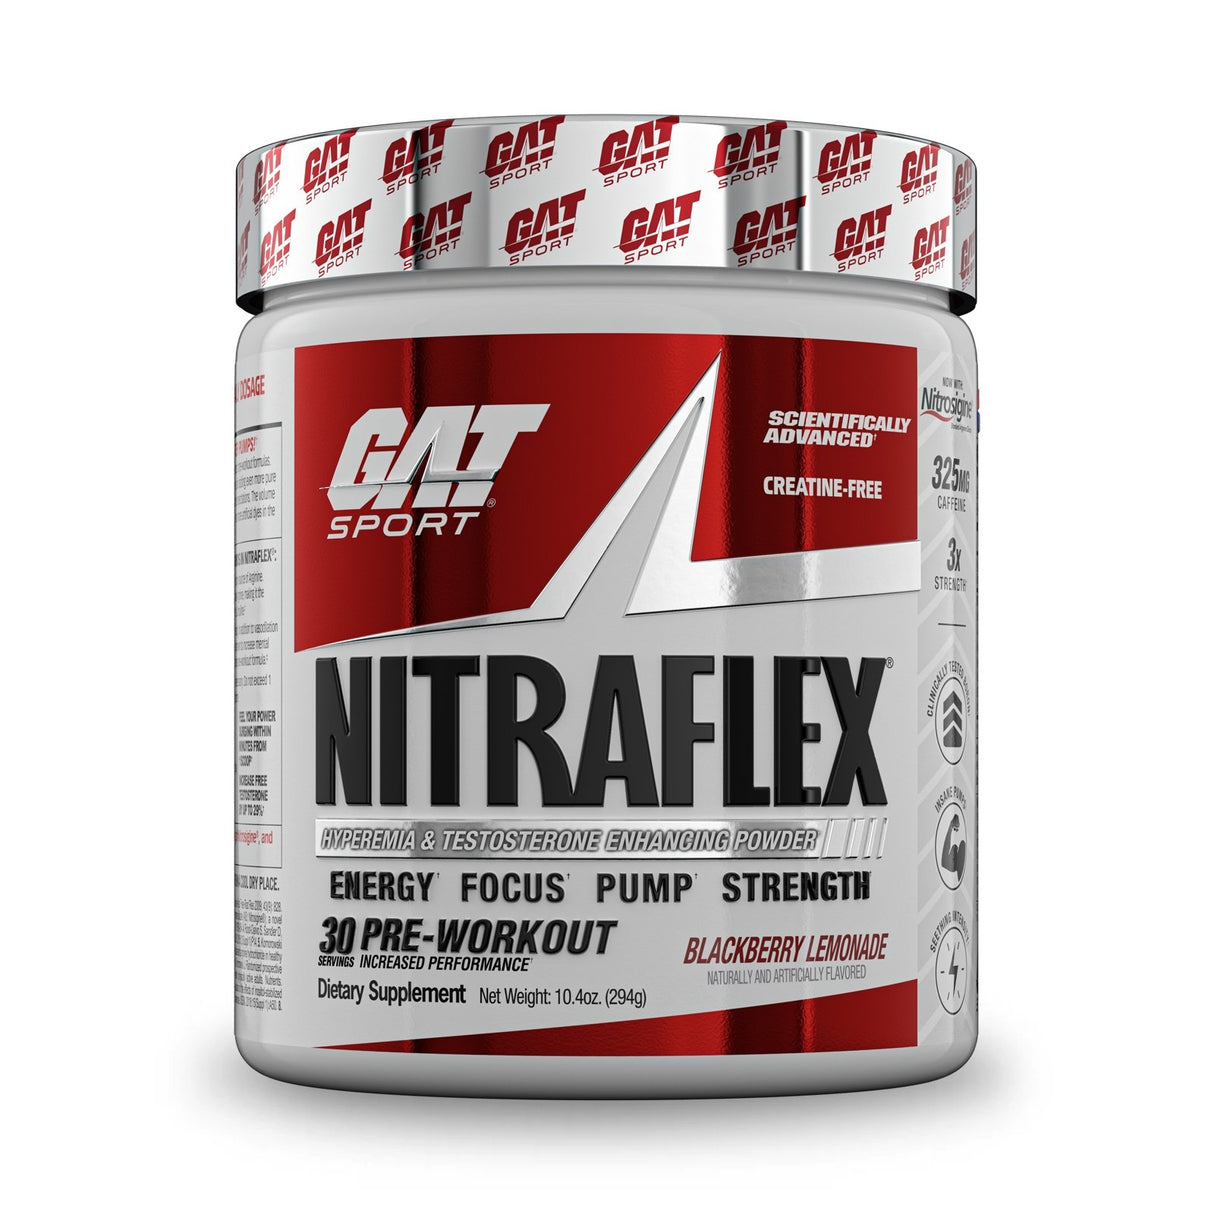 GAT SPORT NITRAFLEX ADVANCED Pre-Workout